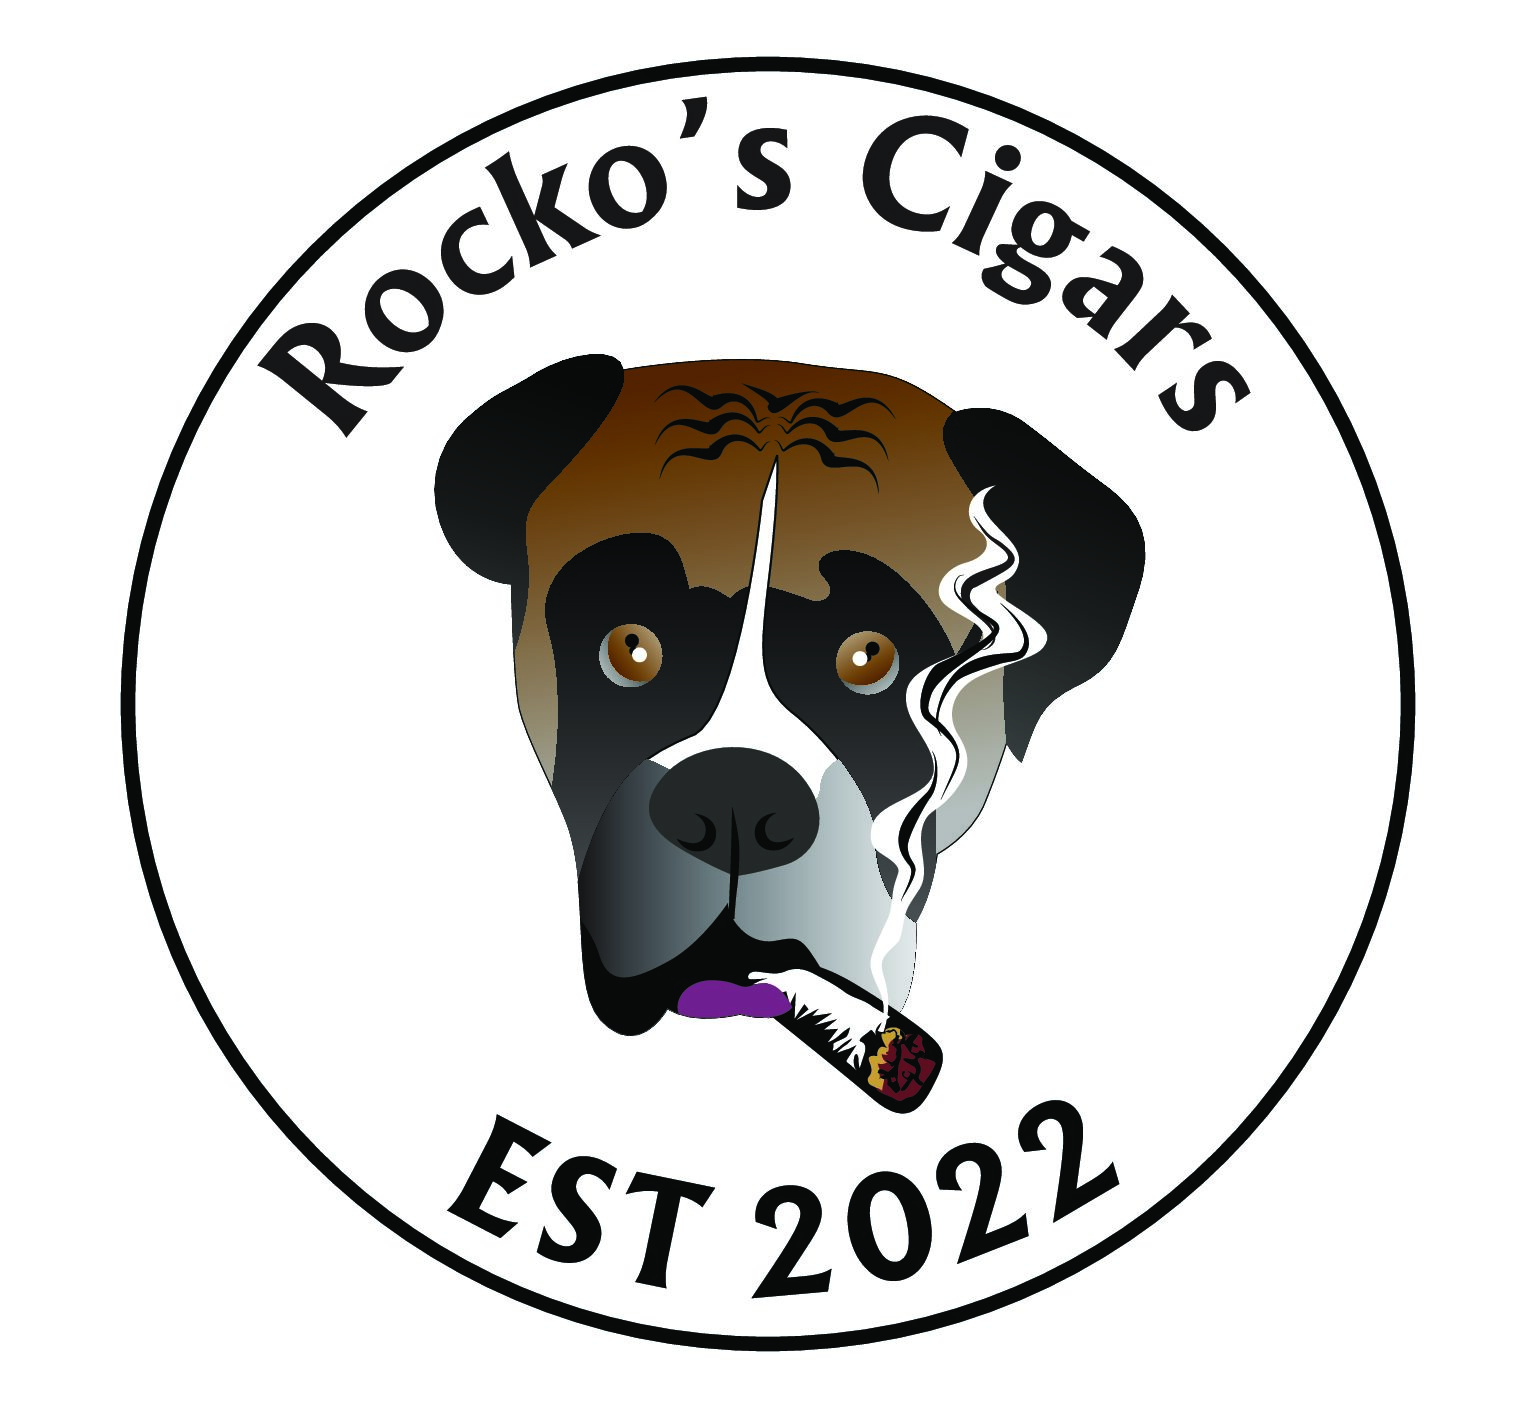 Rocko’s Cigars